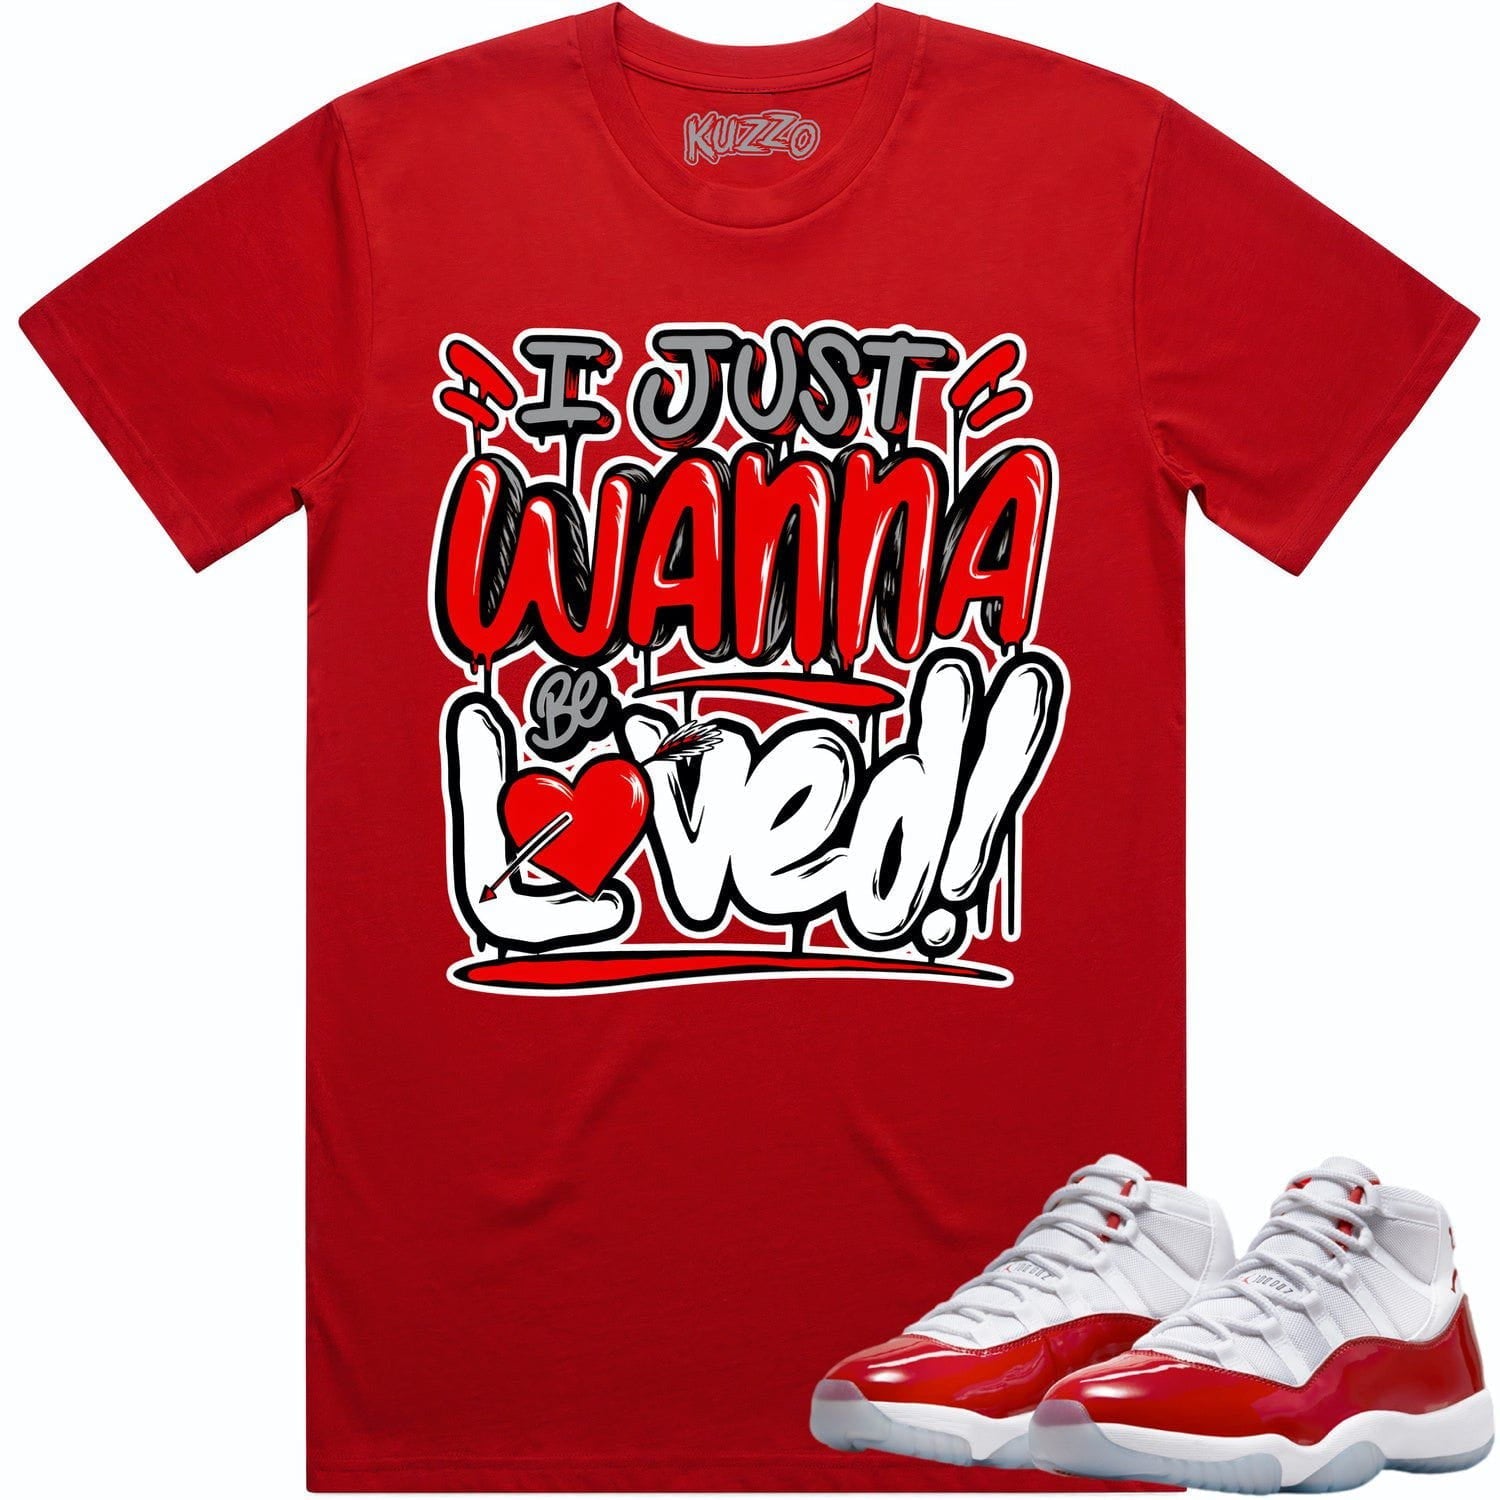 Cherry 11s Shirt - Jordan Retro 11 Cherry Shirts - Red Loved